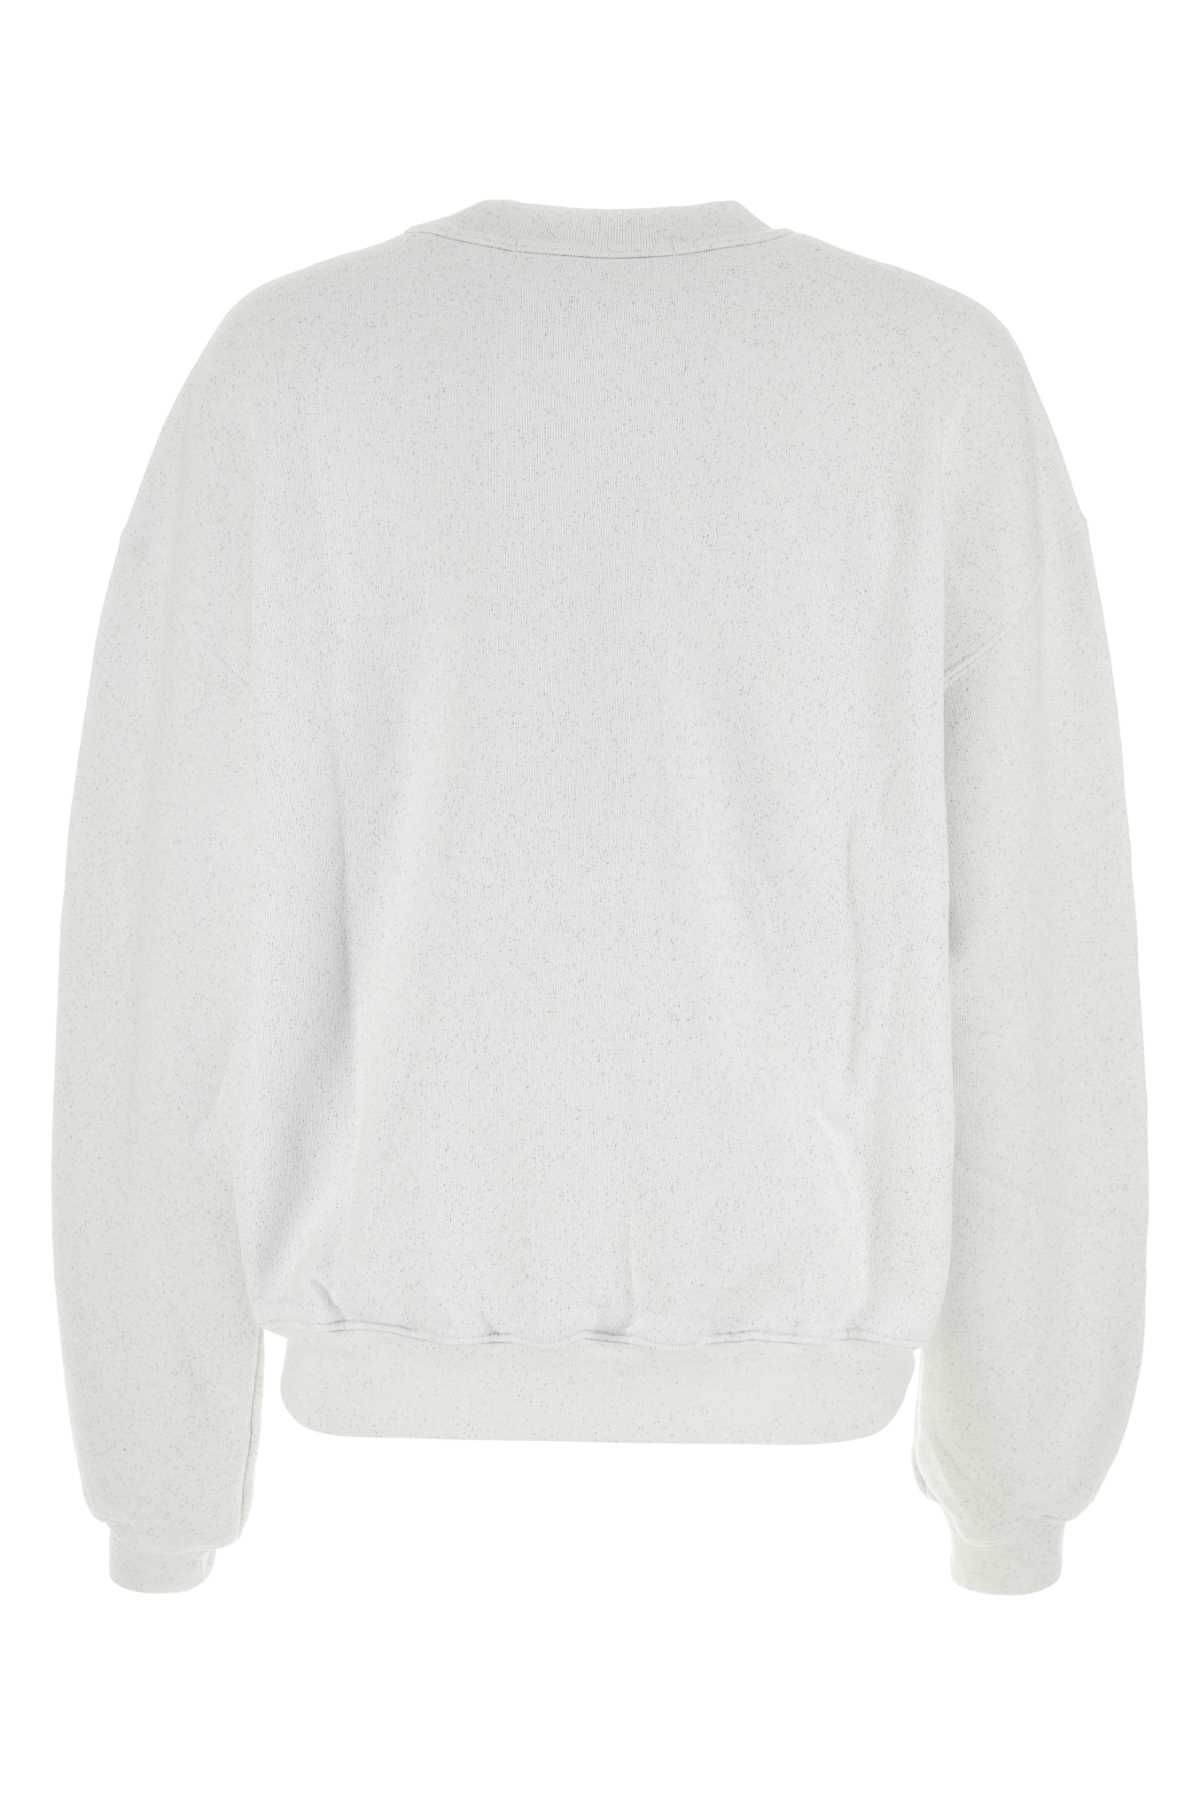 Alexander Wang Melange White Cotton Oversize Sweatshirt In Brightwhite